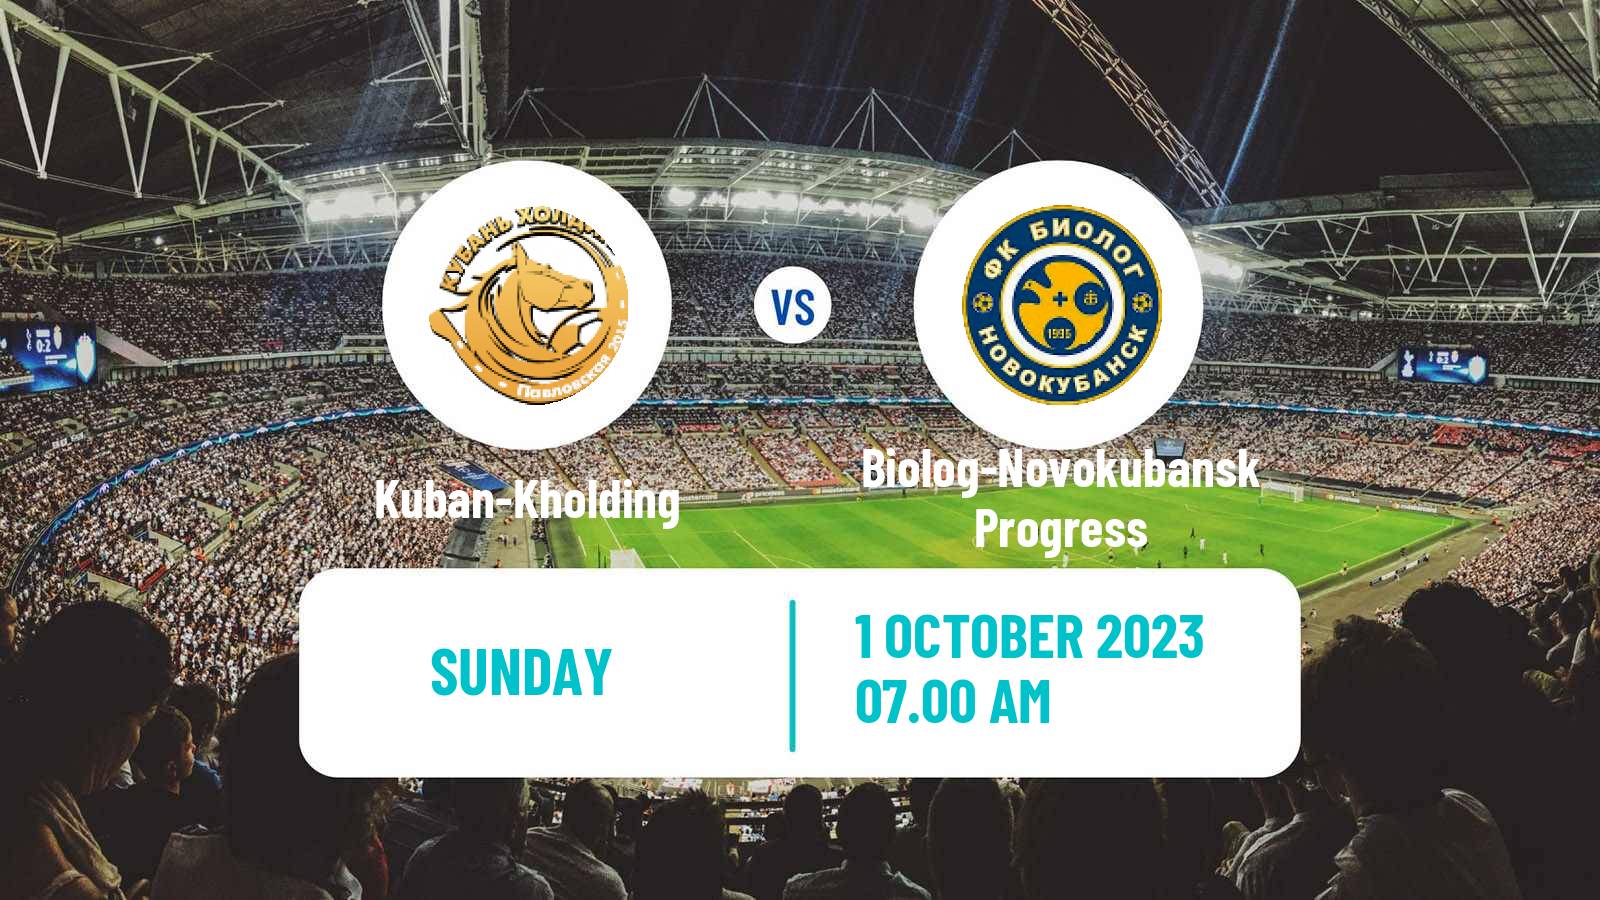 Soccer FNL 2 Division B Group 1 Kuban-Kholding - Biolog-Novokubansk Progress